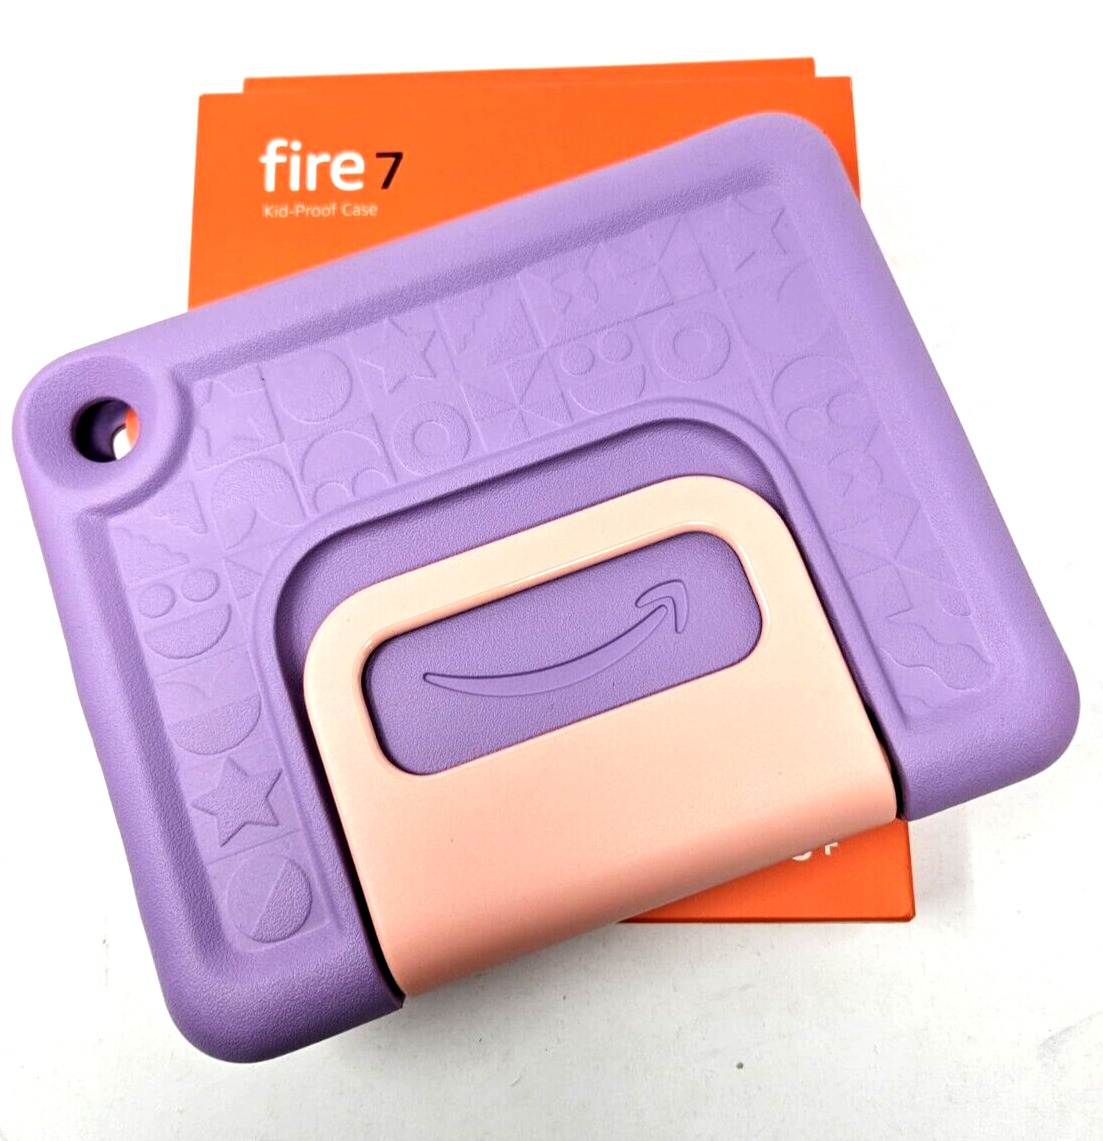 Amazon Kid-Proof Case for Fire 7 Tablet Works w/12th Gen tablet 2022 Purple